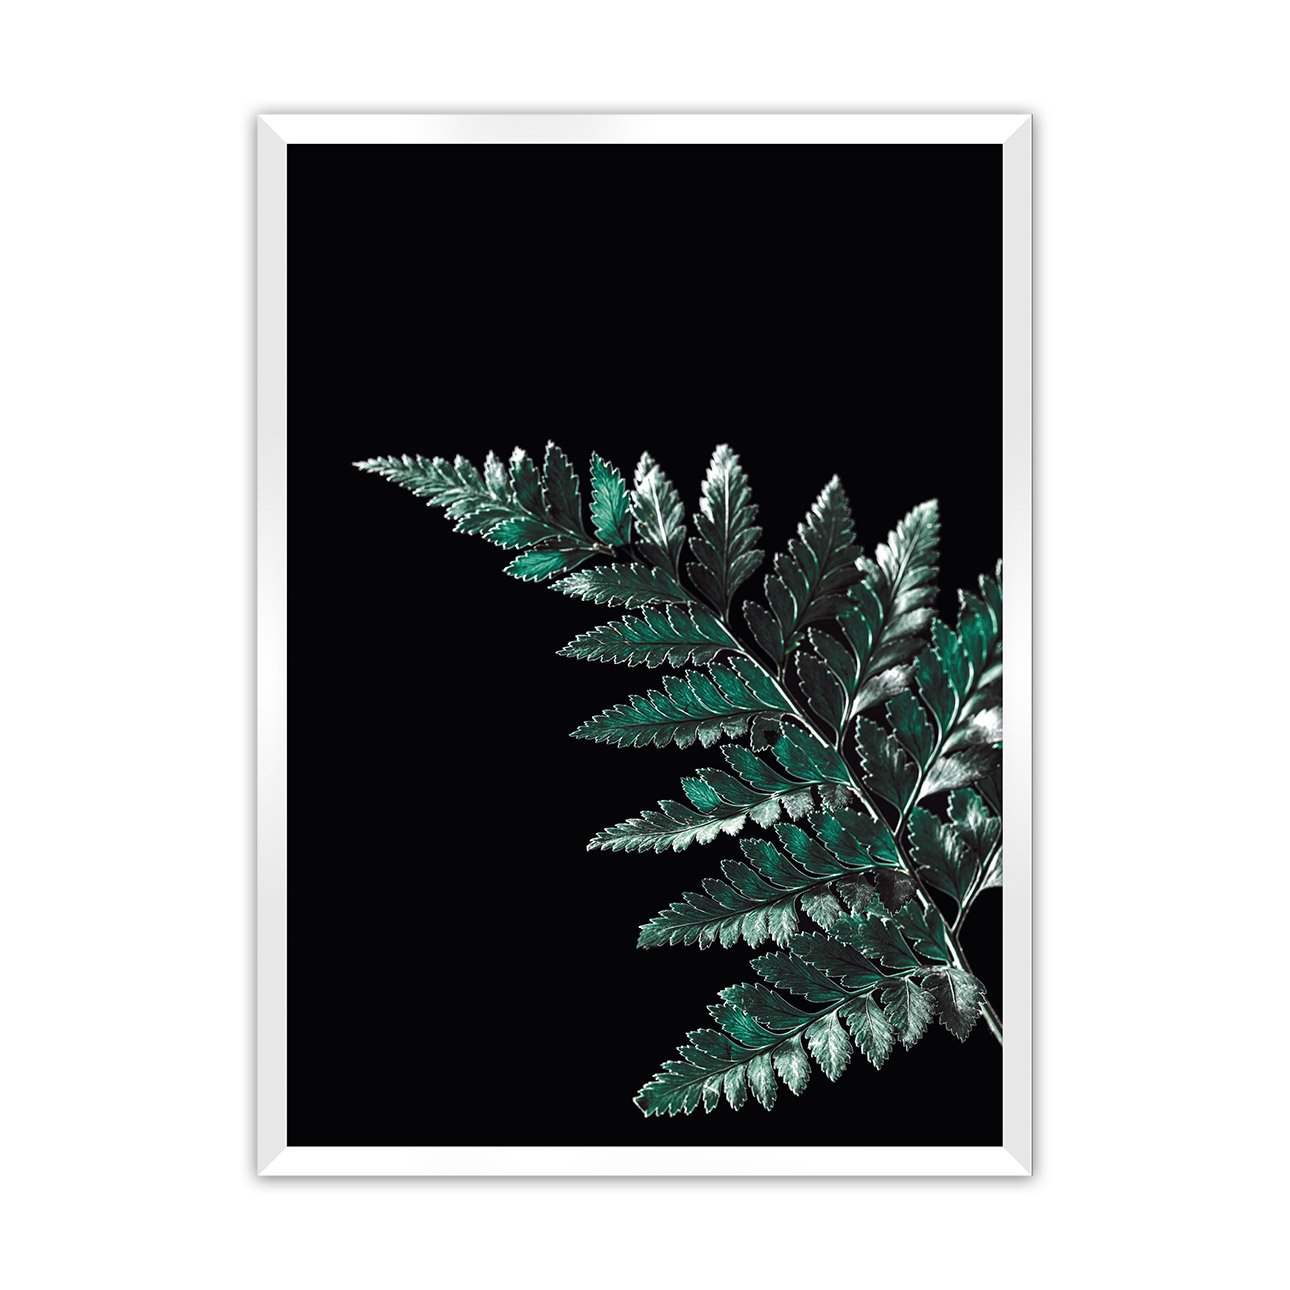 Dekoria Plagát Dark Leaf, 40 x 50 cm, Ramka: Biała